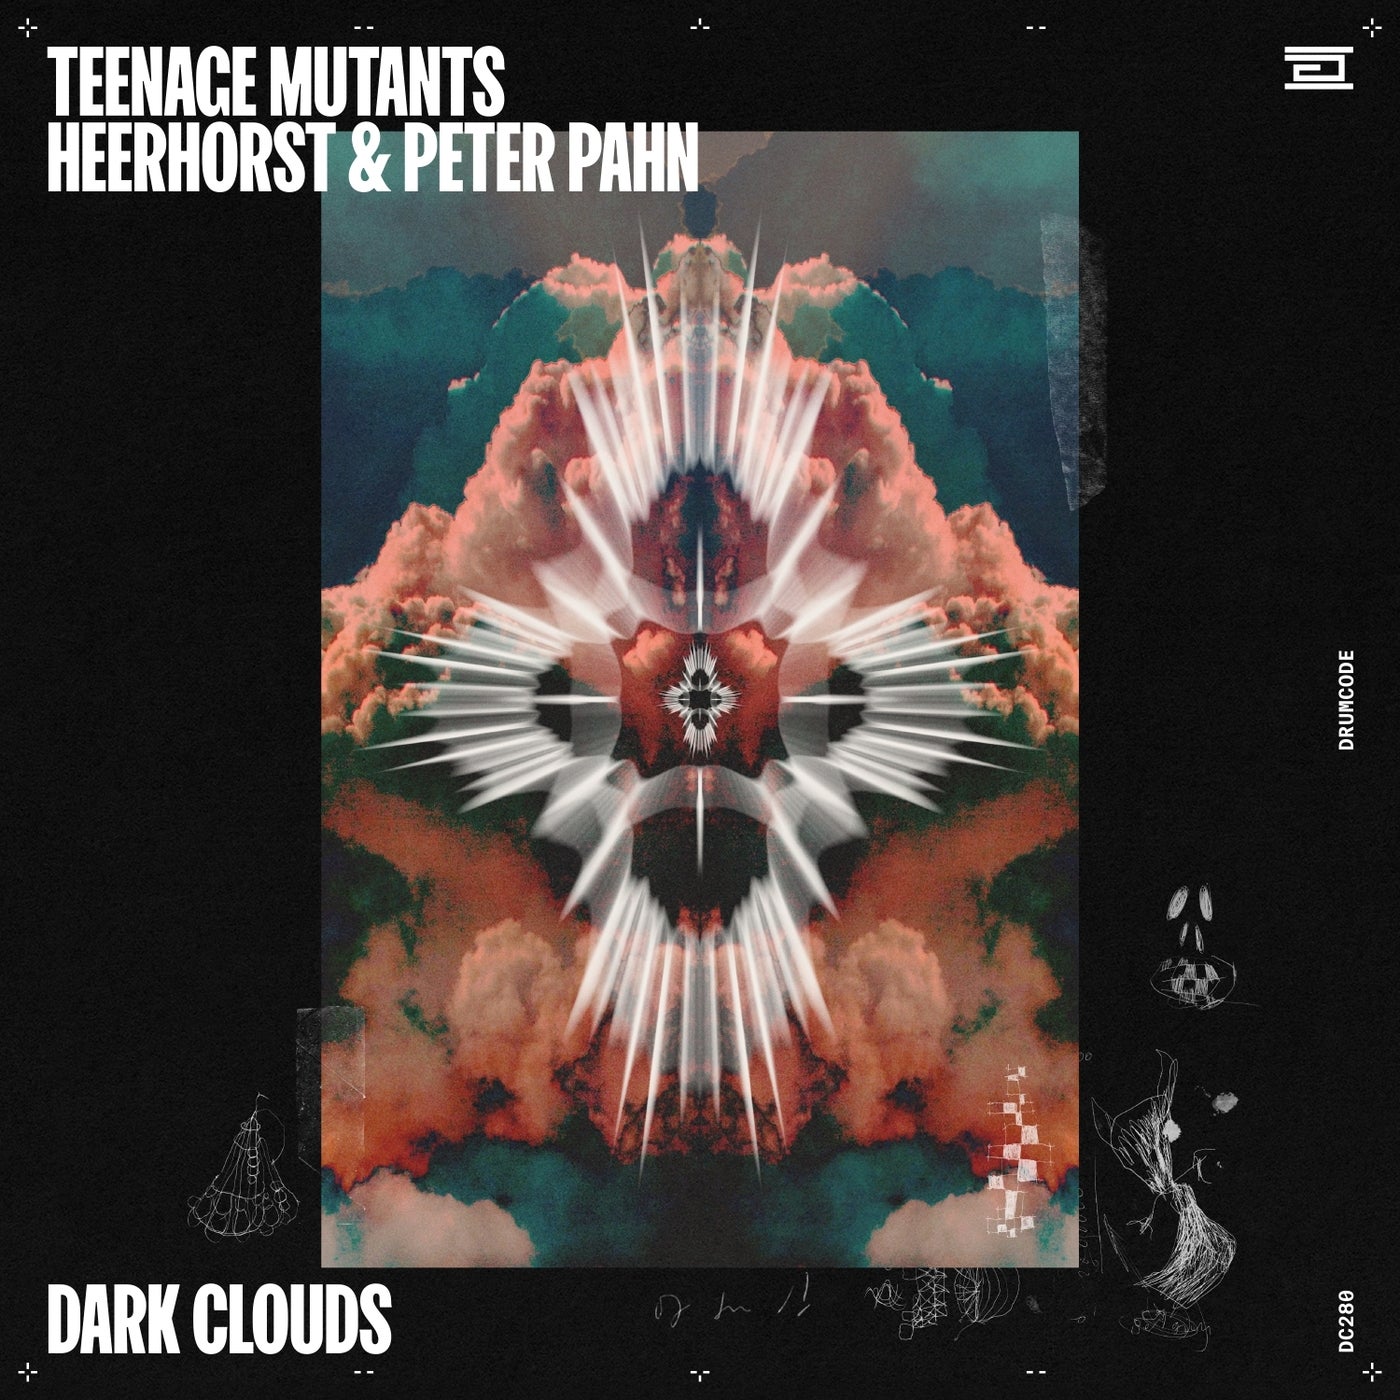 Teenage Mutants - Dark Clouds feat. Heerhorst & Peter Pahn (Original Mix)